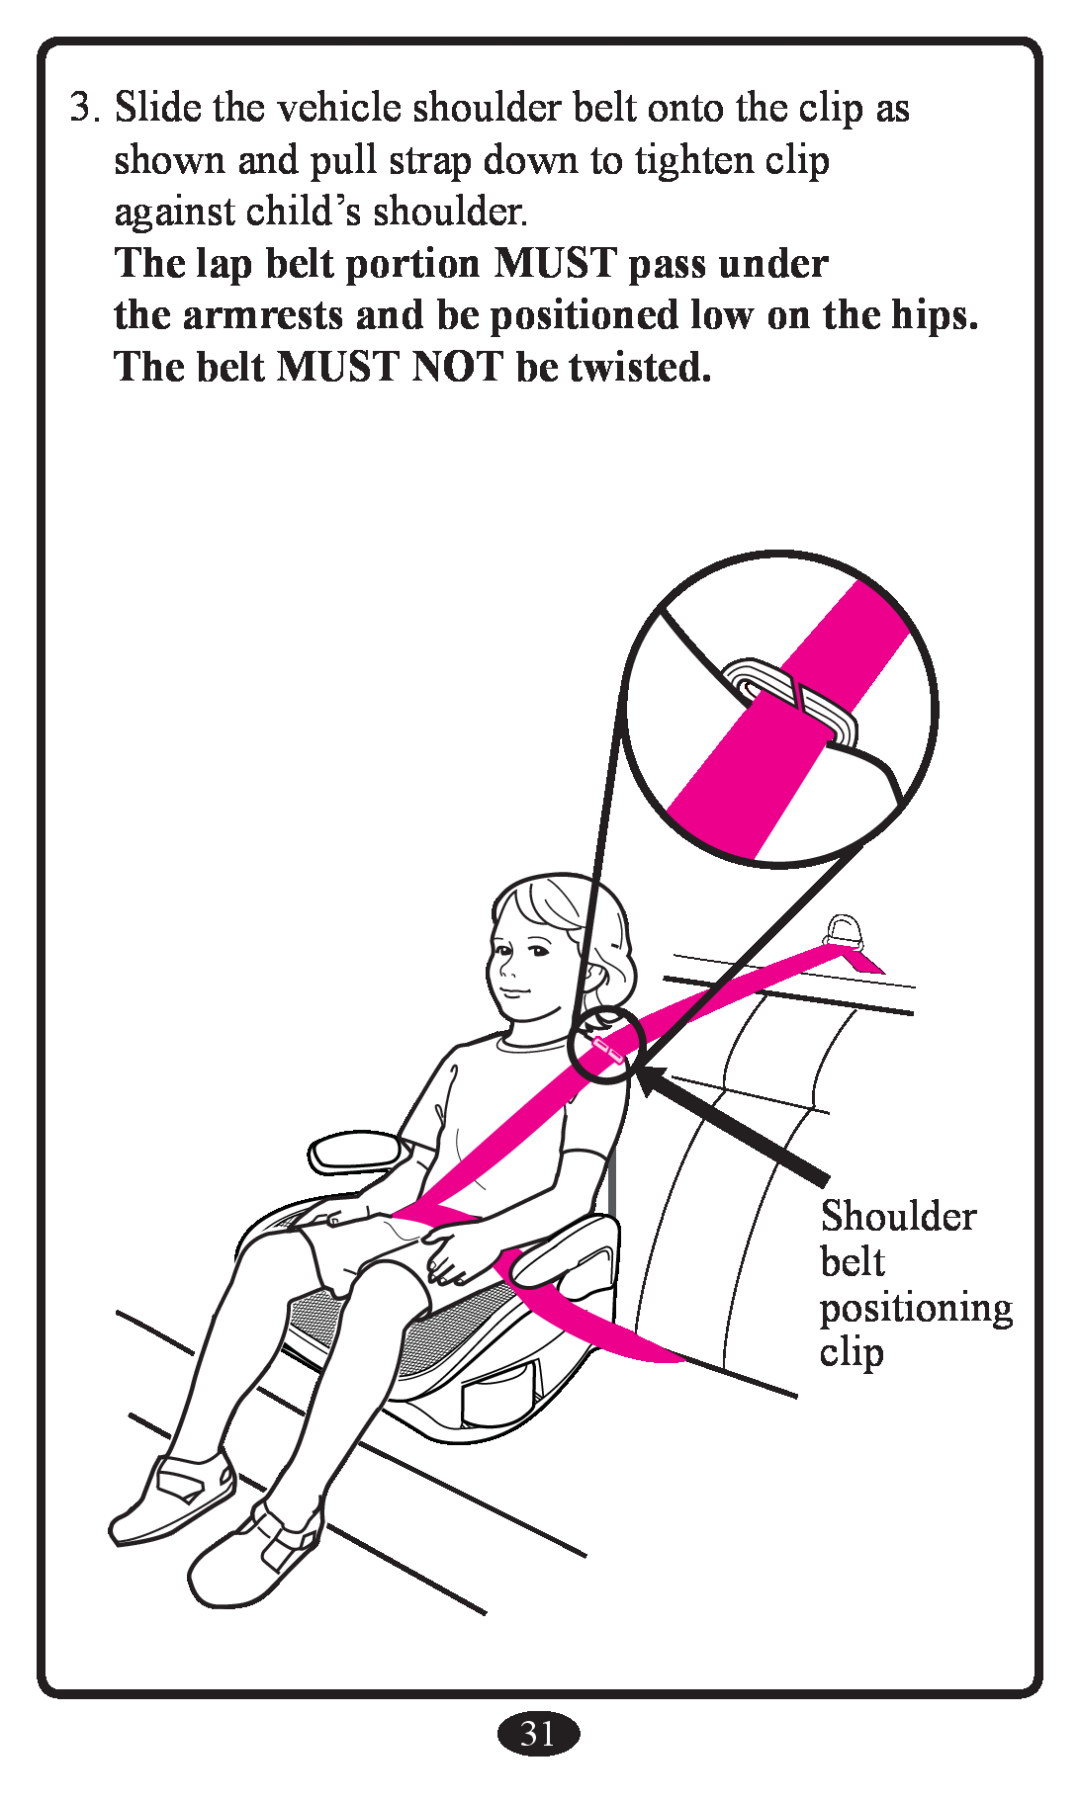 Graco Booster Seat owner manual The lap belt portion MUST pass under, Shoulder belt positioning clip 